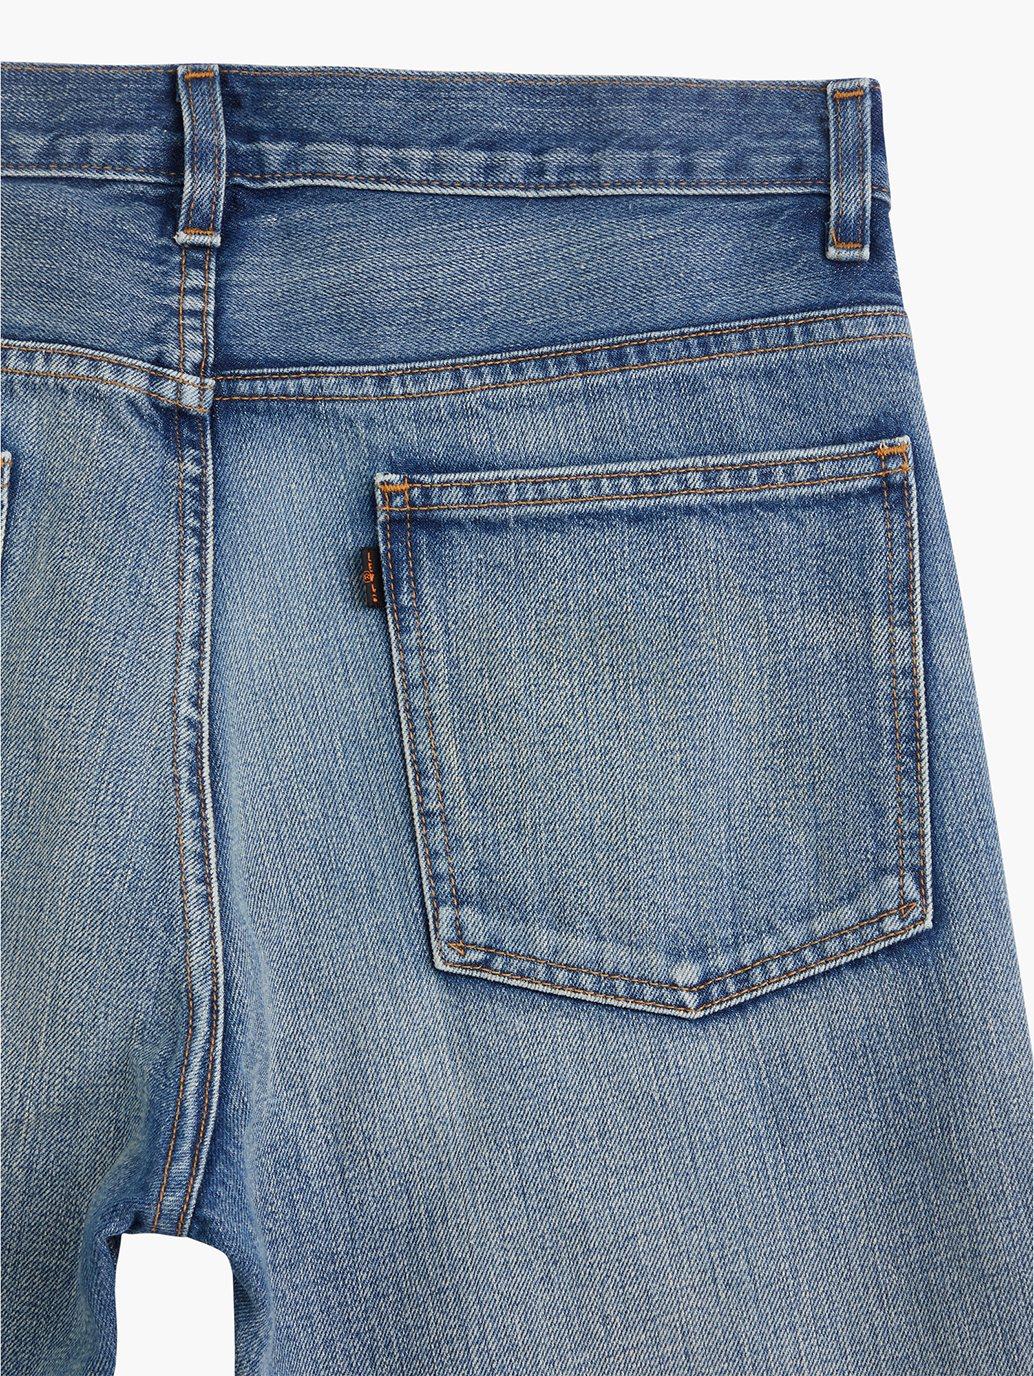 levis malaysia vintage clothing 1965 mens 606 super slim jeans 360600006 16 Details